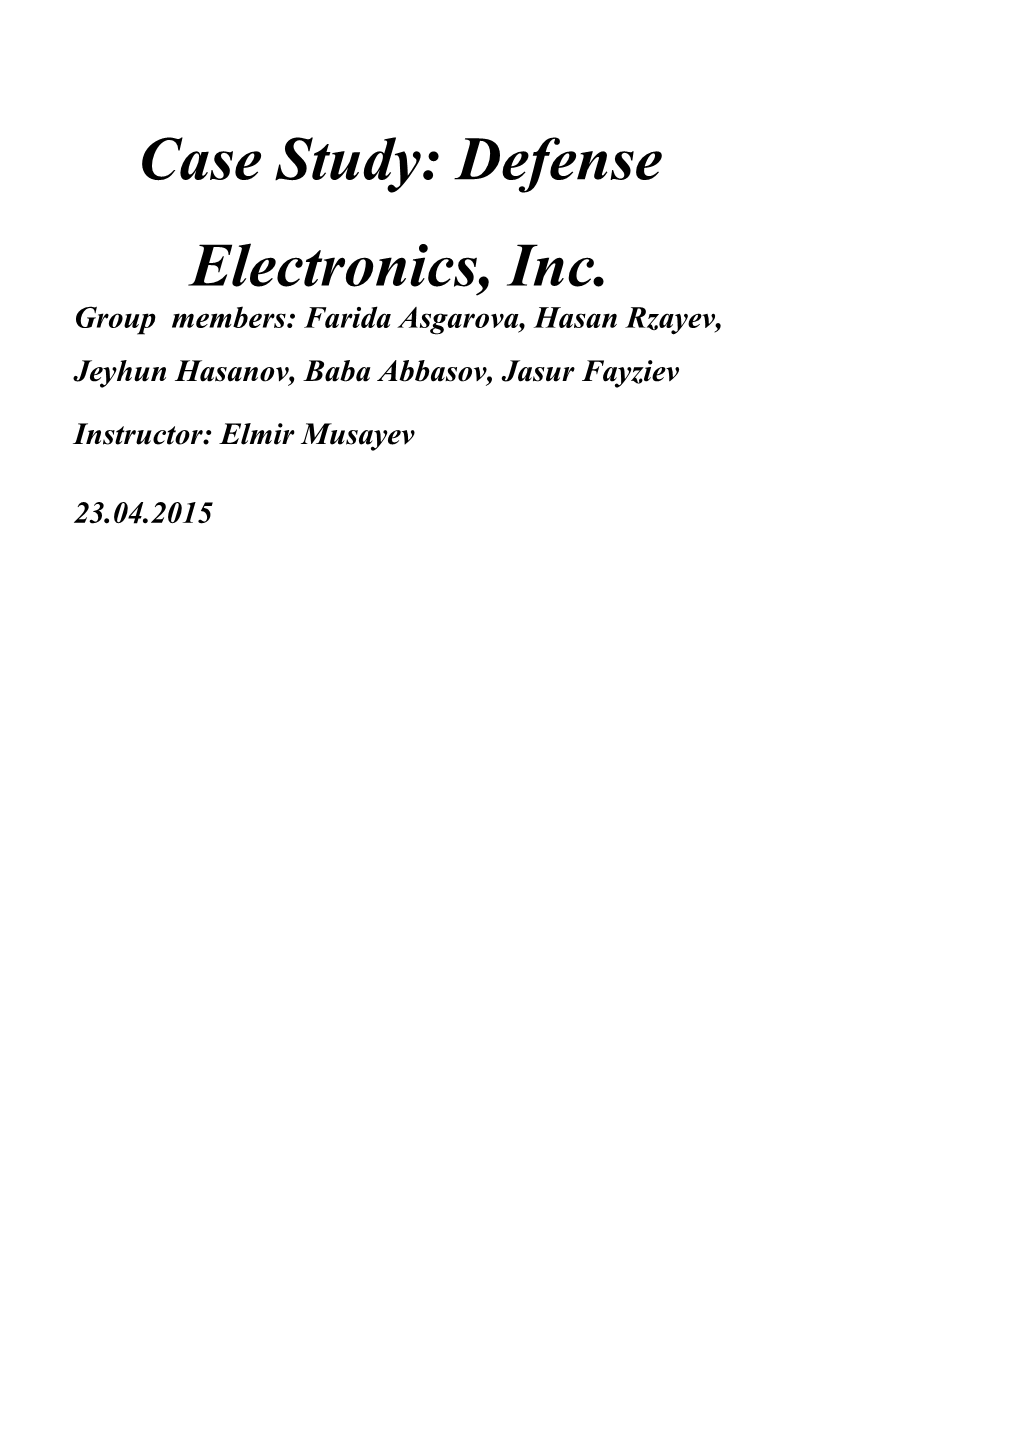 Case Study: Defense Electronics, Inc